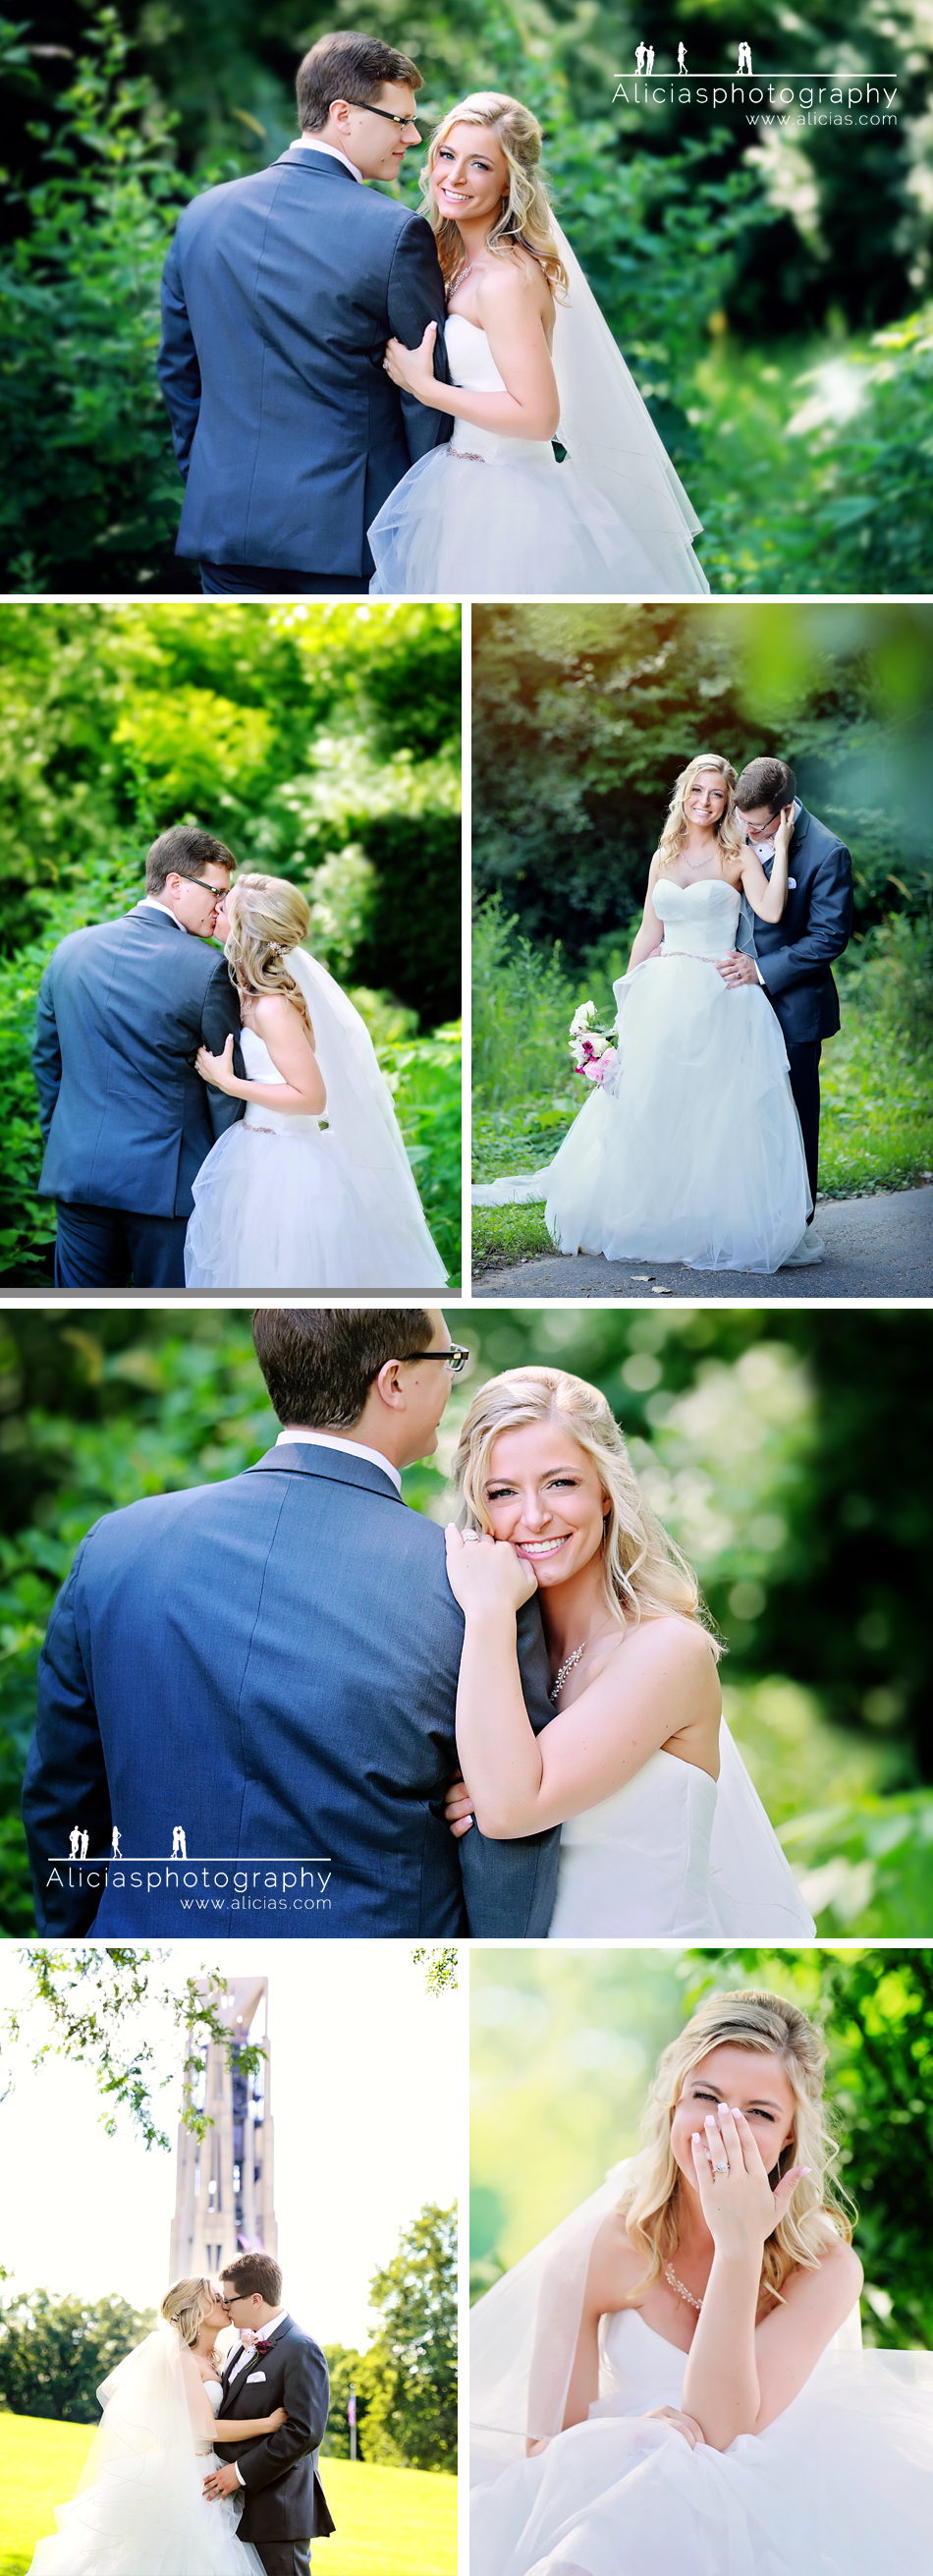 Chicago Wedding Photographer | Naperville Wedding Photographer | Alicia's Photography